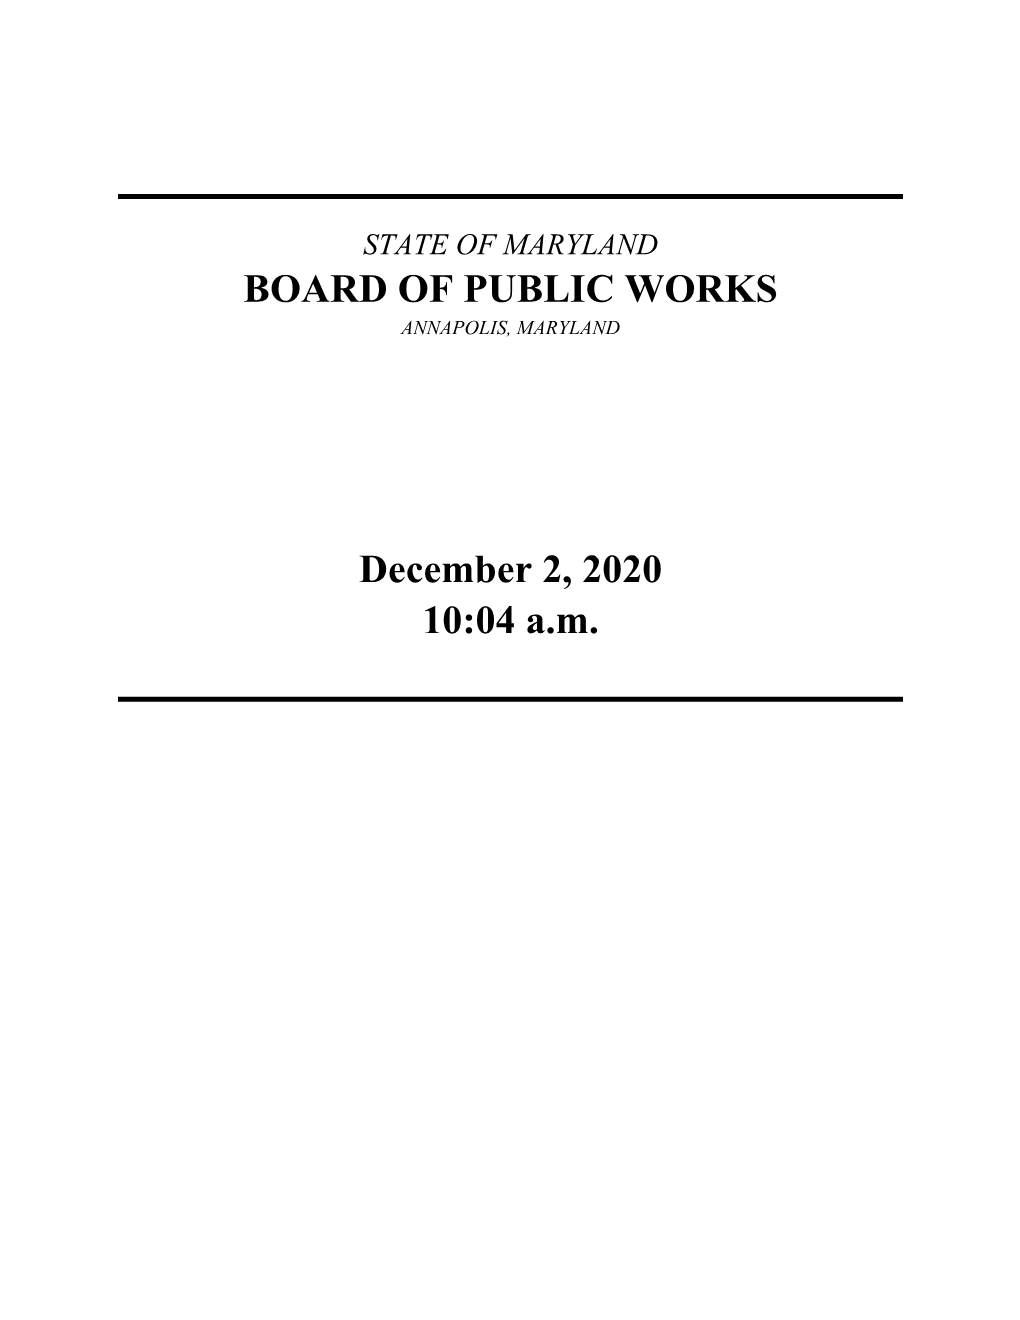 BOARD of PUBLIC WORKS December 2, 2020 10:04 A.M